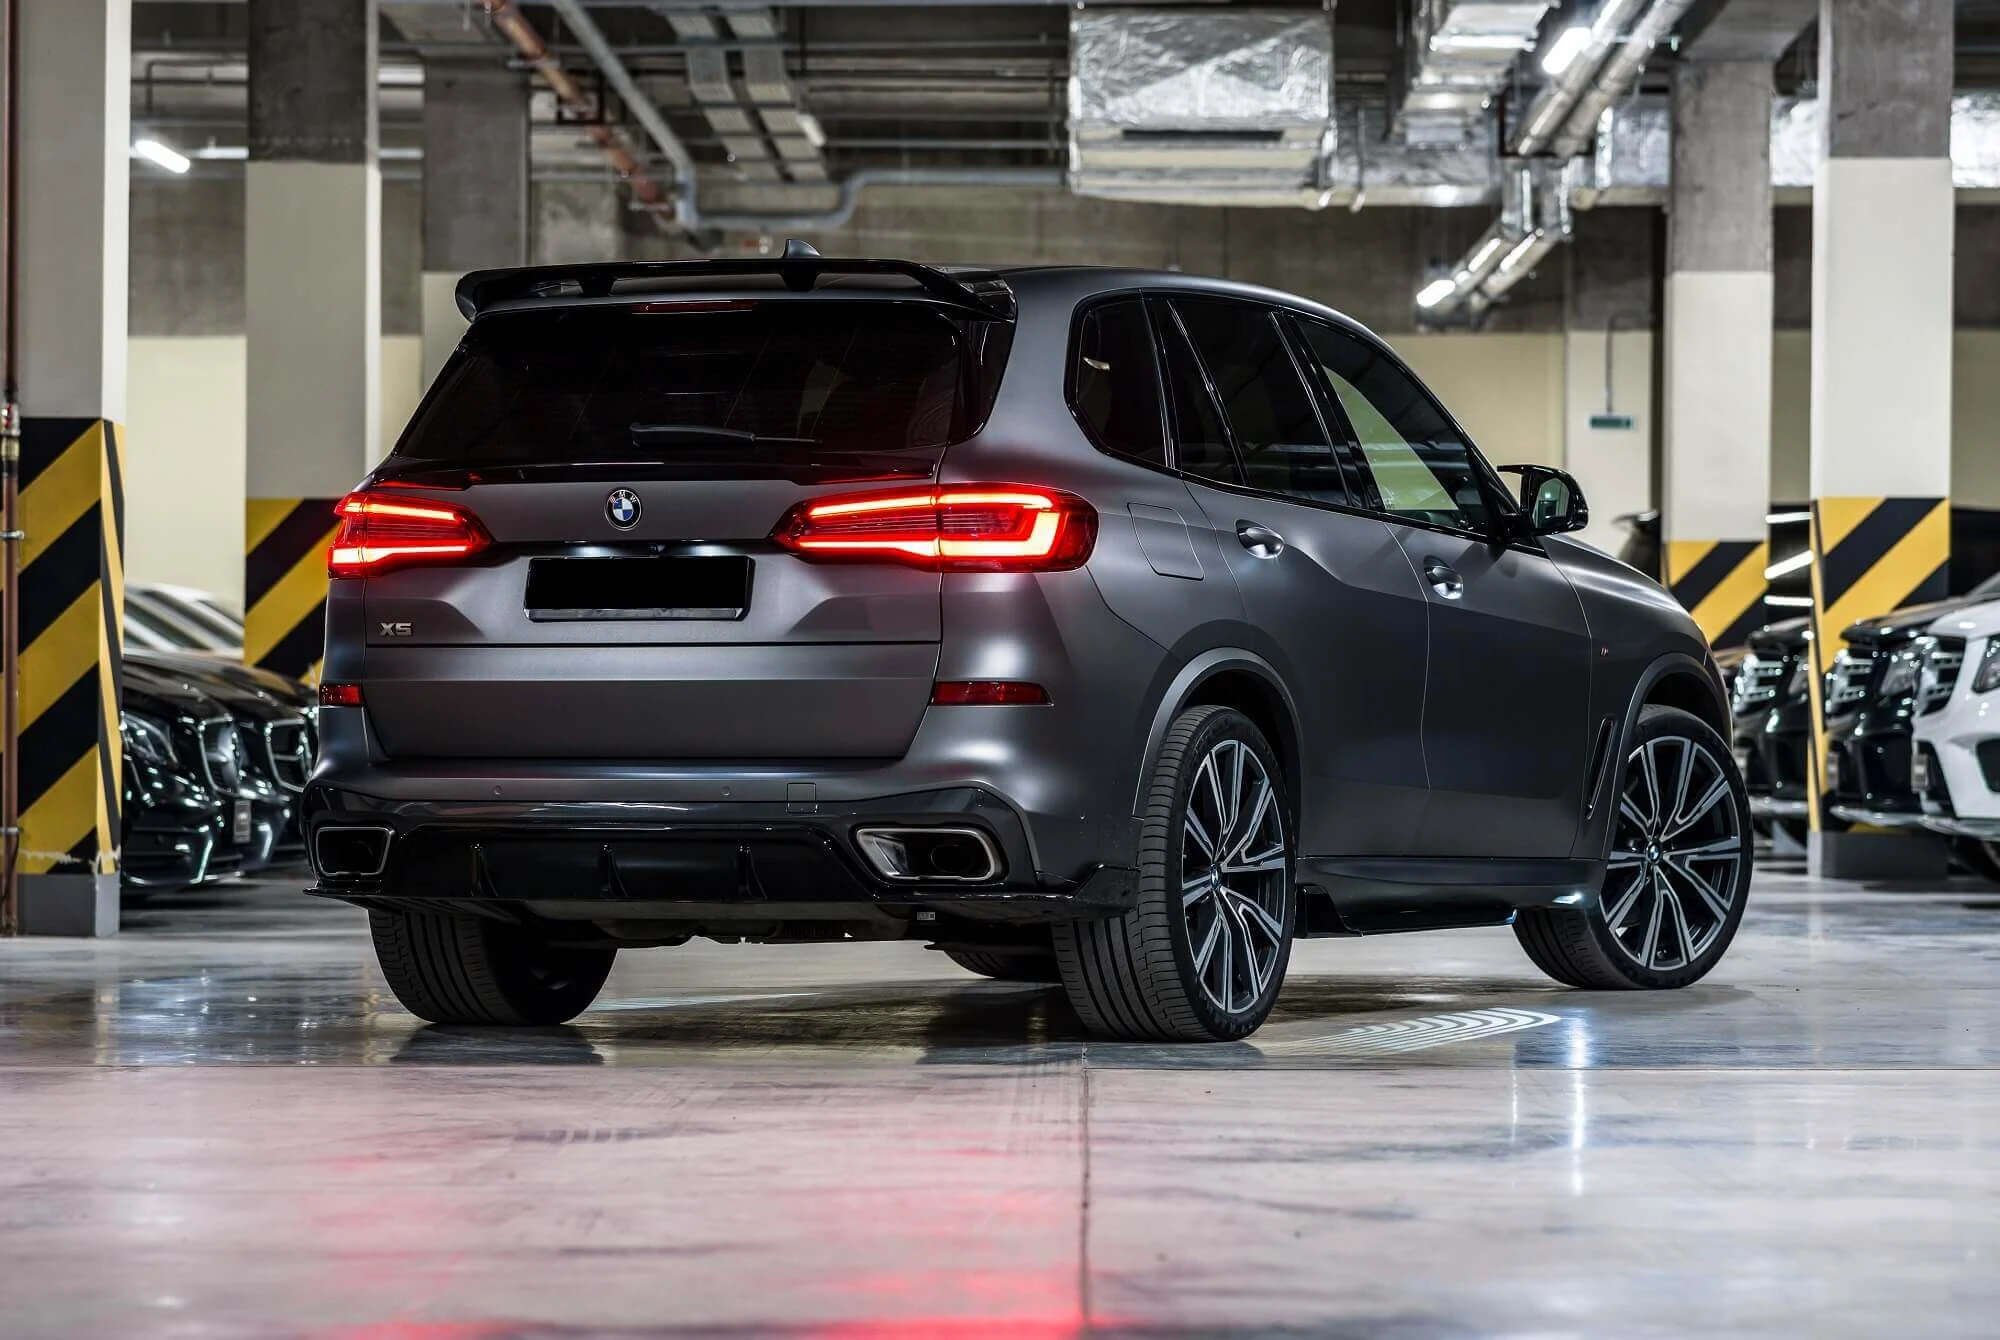 BMW X5 Grey